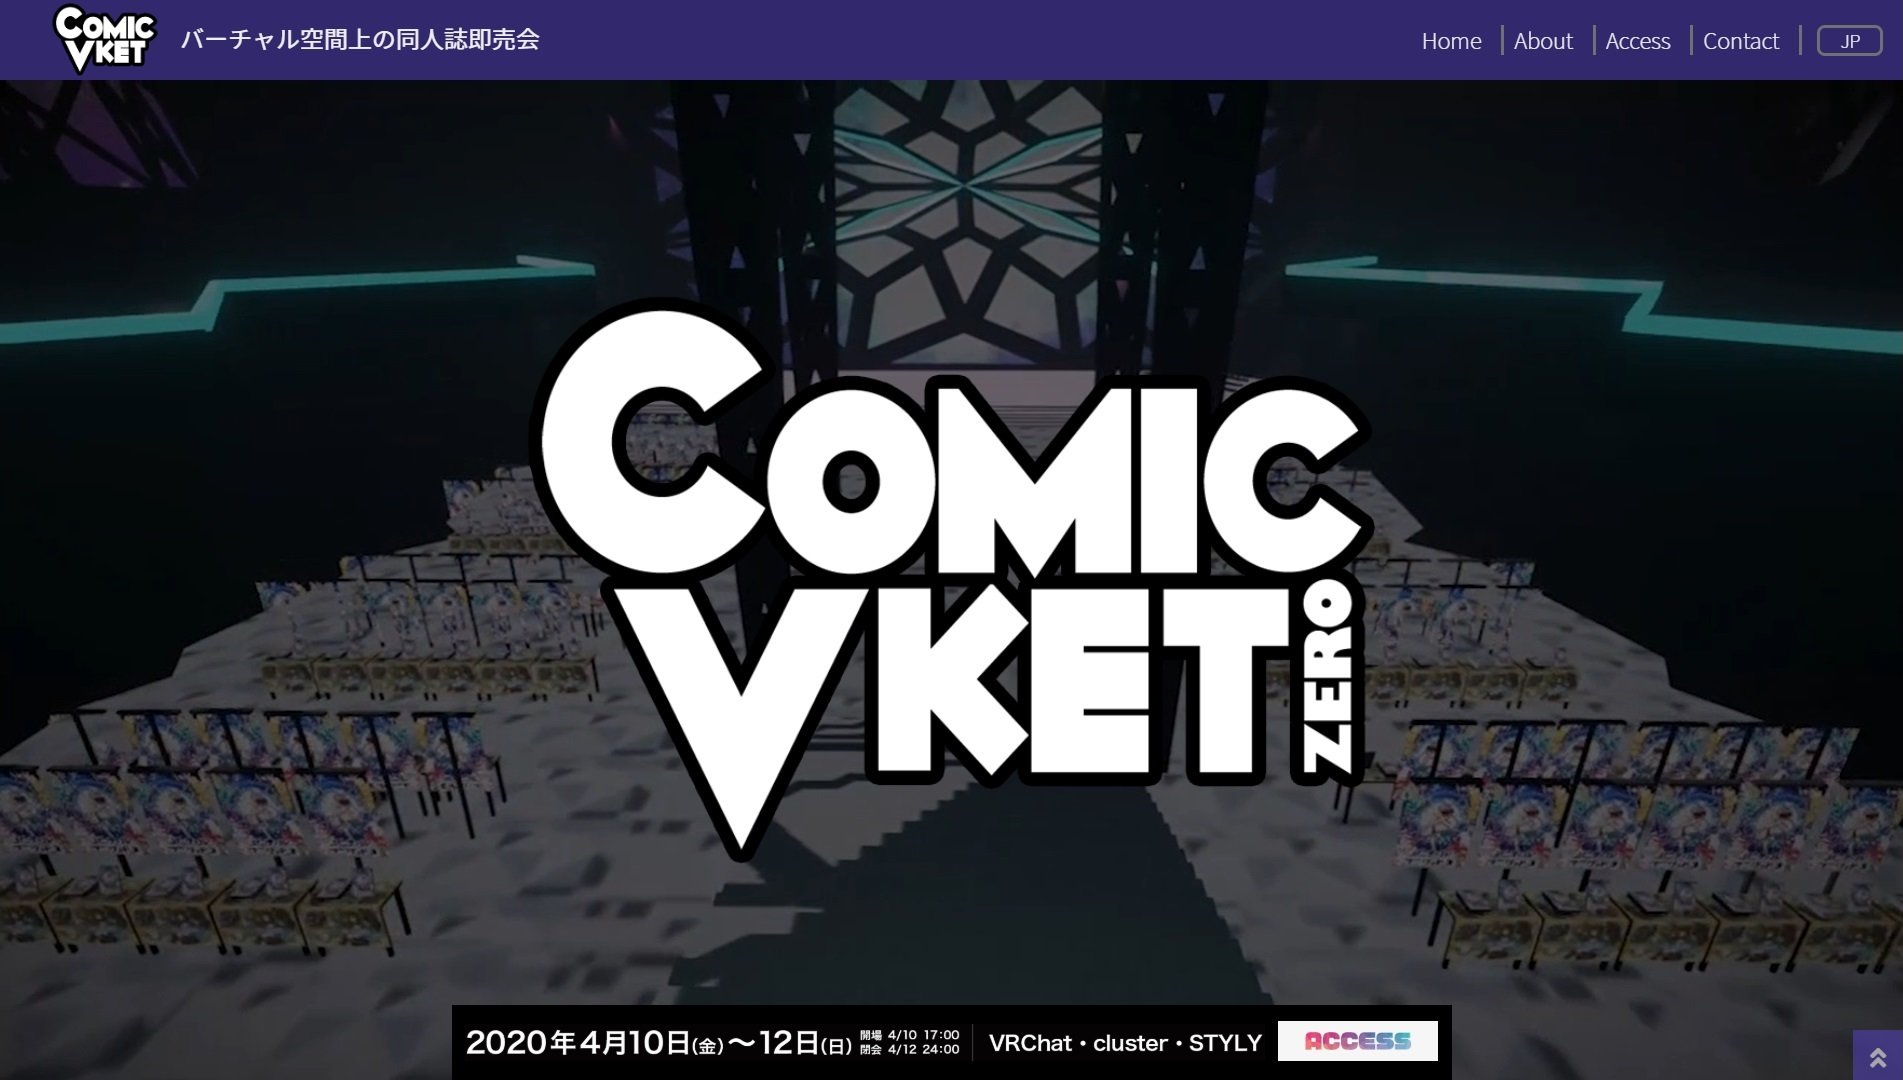 VR同人誌即売会「ComicVket 0」4月に開催　イベントの自粛受け「自宅で楽しめる環境提供したい」